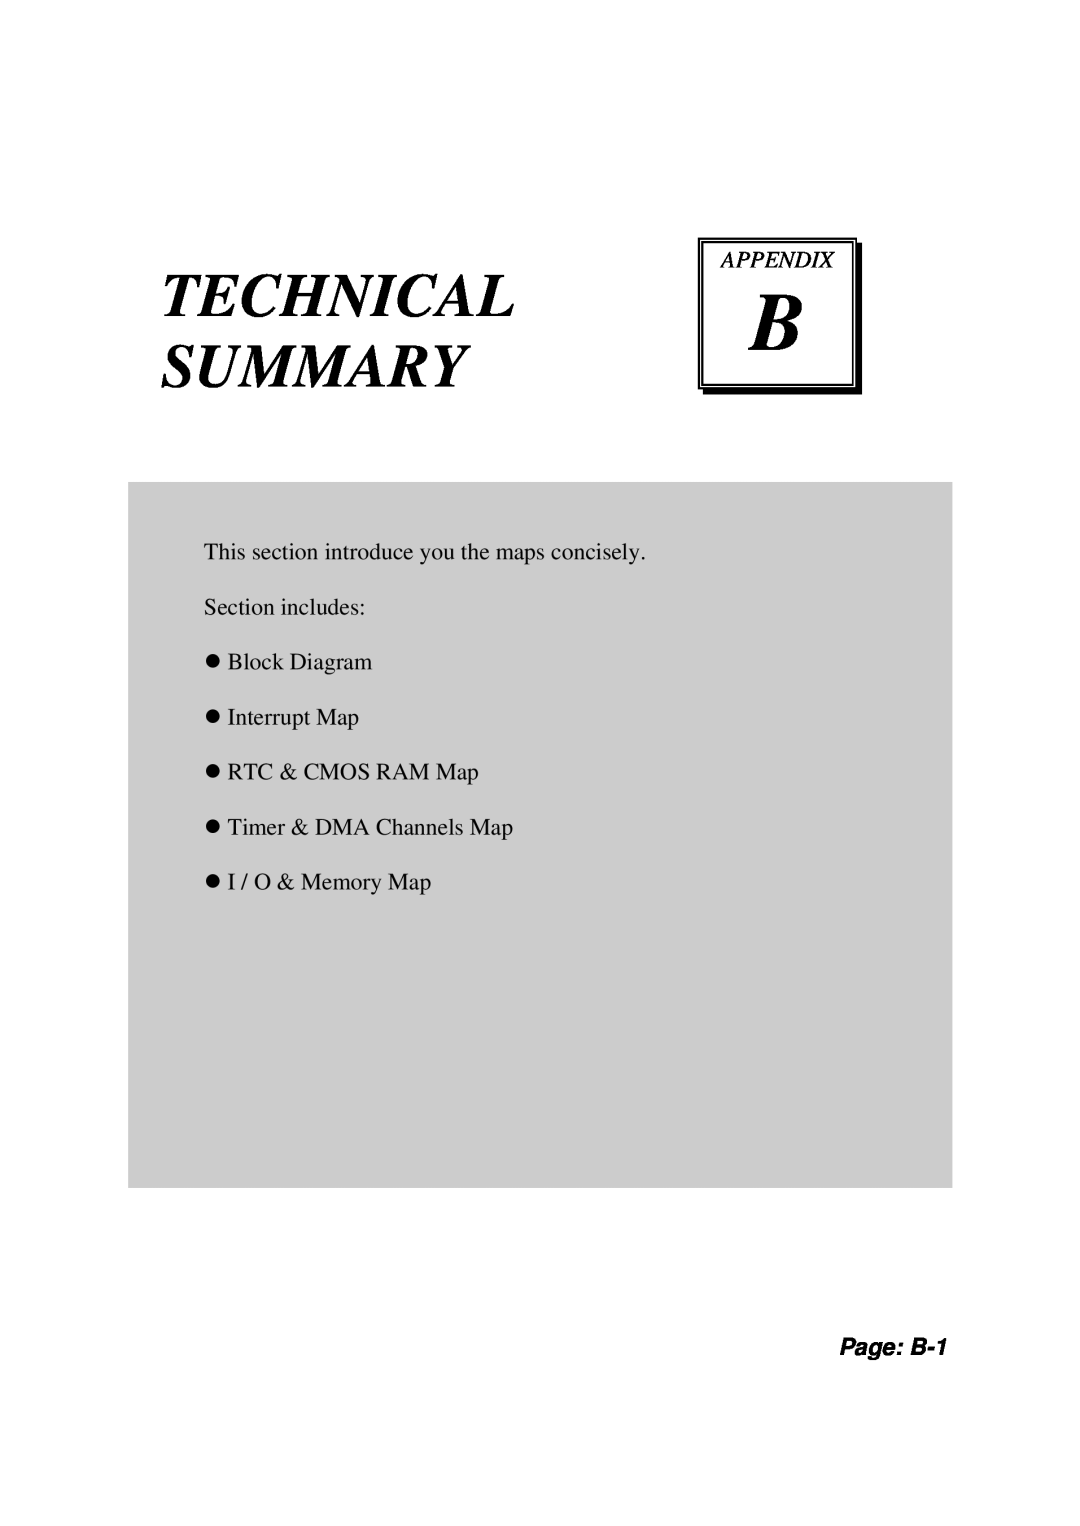 Intel PMB-531LF user manual Technical Summary, Page B-1, Appendix 